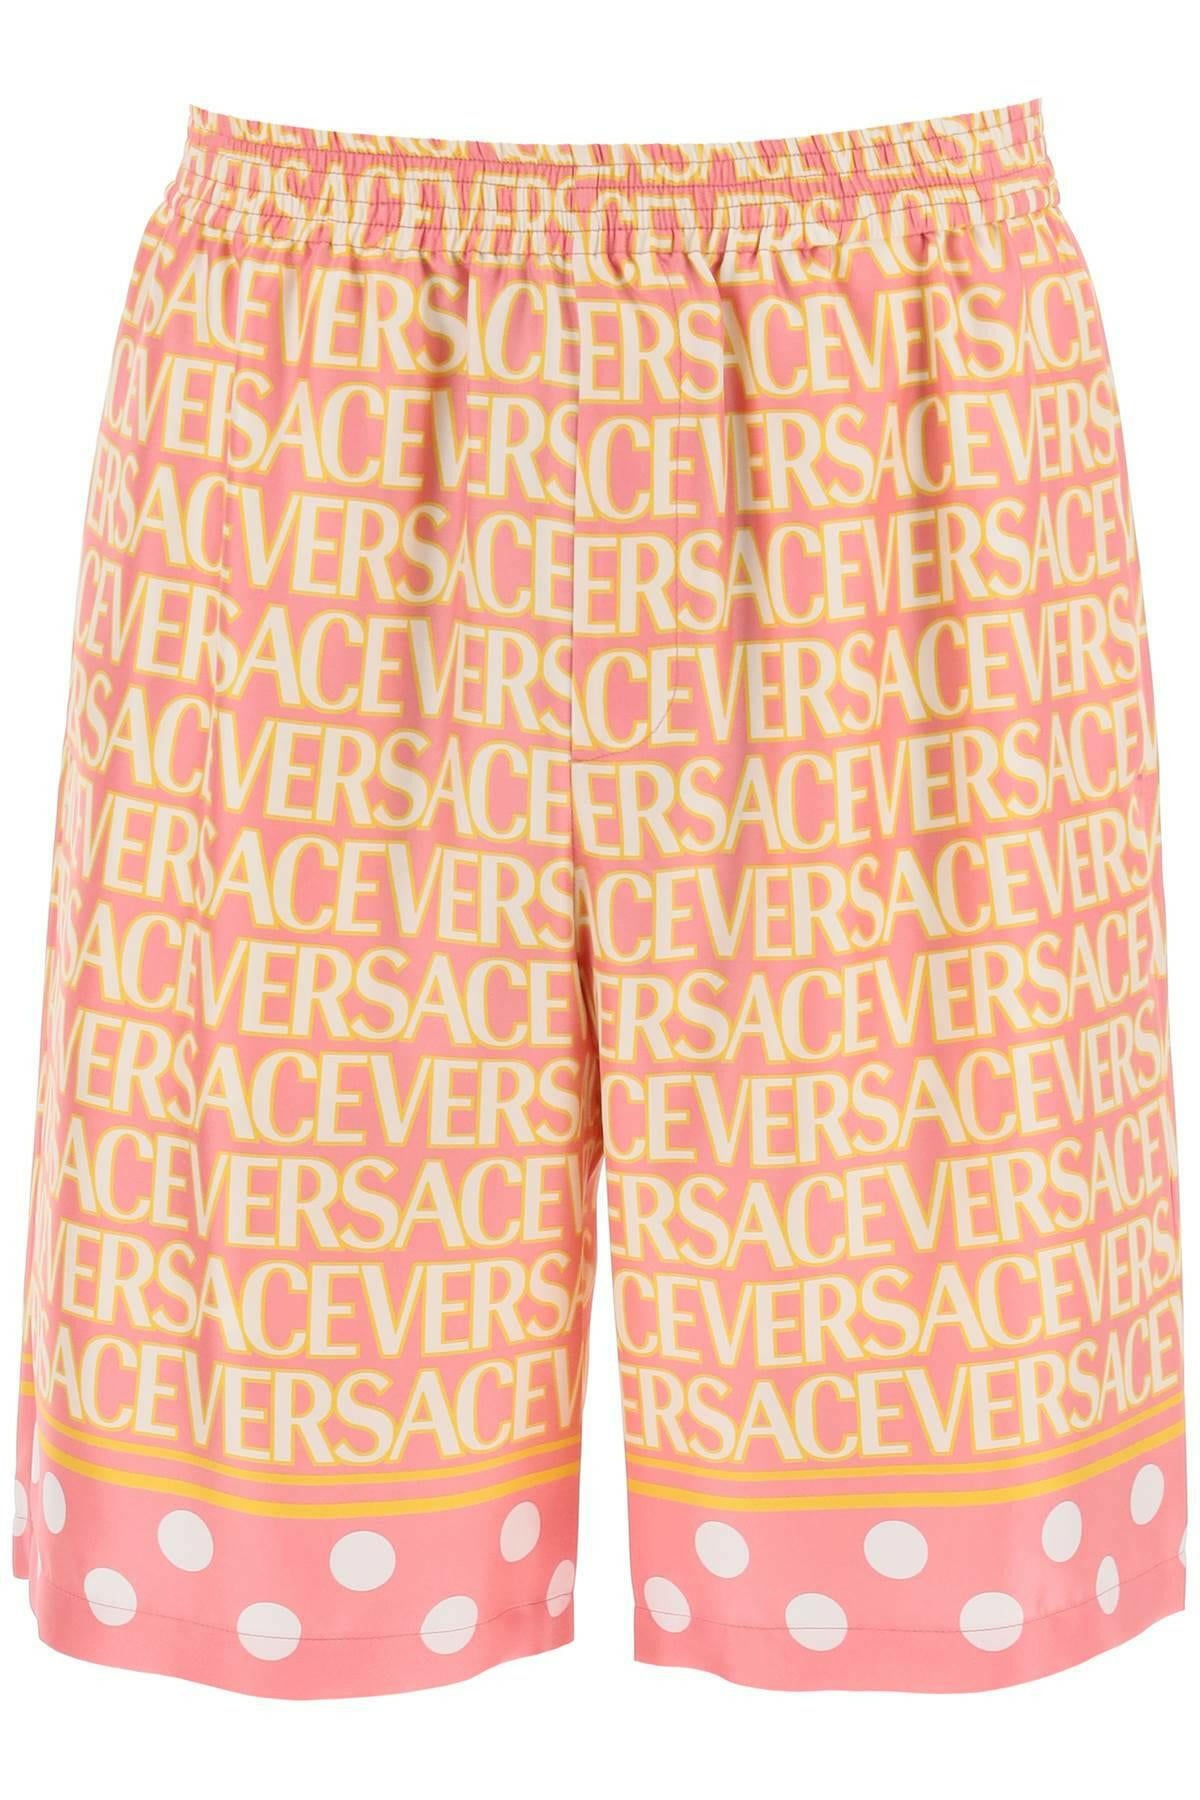 Versace Versace Allover Silk Shorts - JOHN JULIA